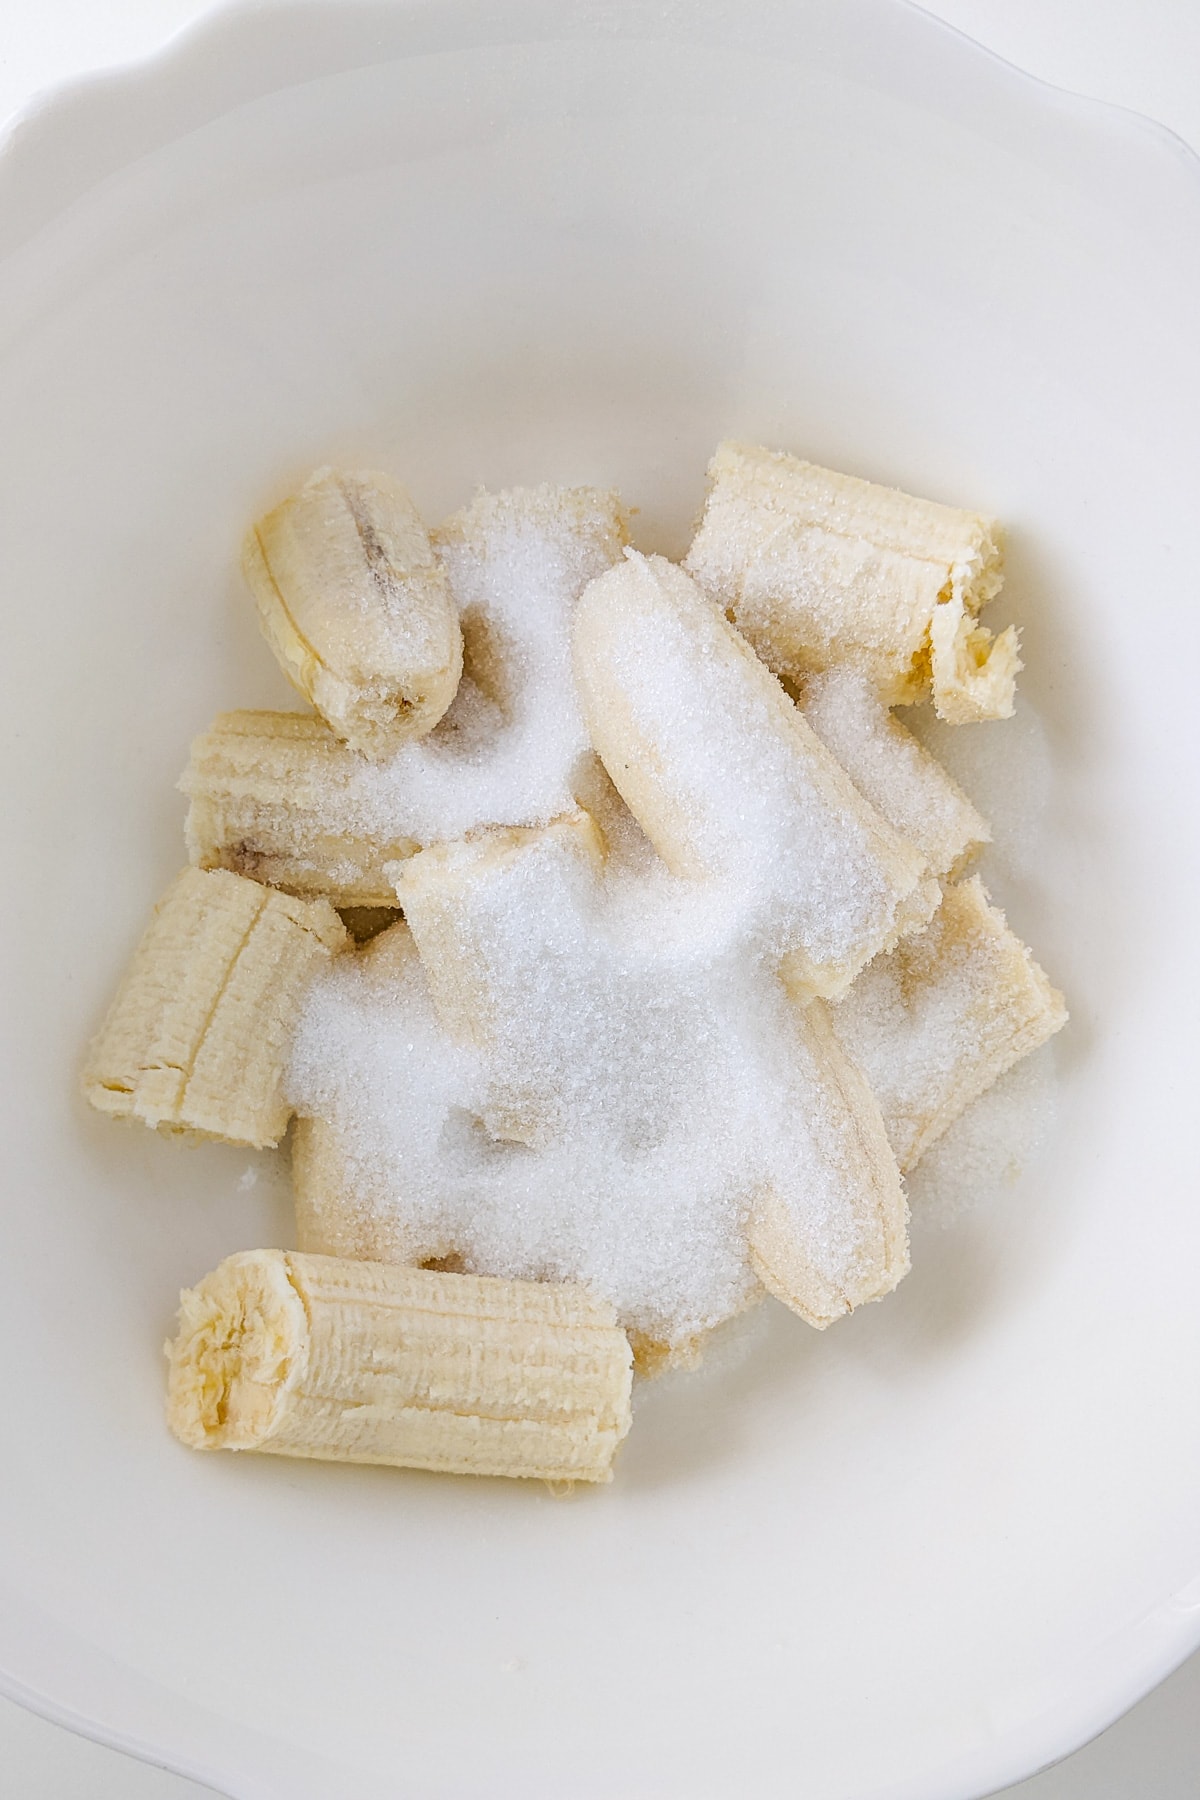 Banana halves covered with cane sugar.